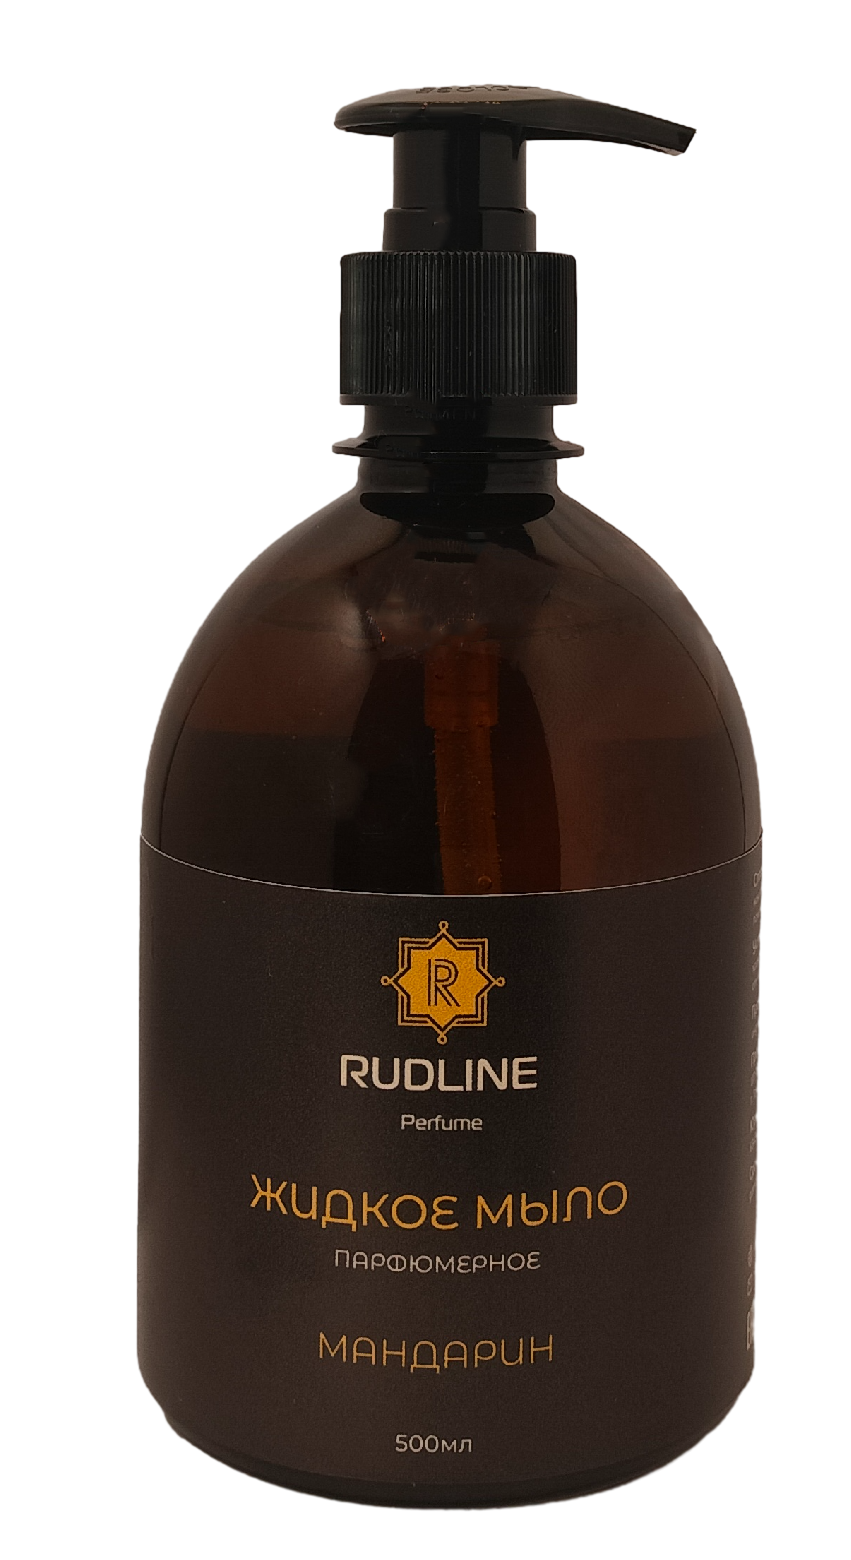 Жидкое мыло парфюмированное RudLine Мандарин 500 мл wonder lab экогель для рук и умывания бергамот и мандарин 540